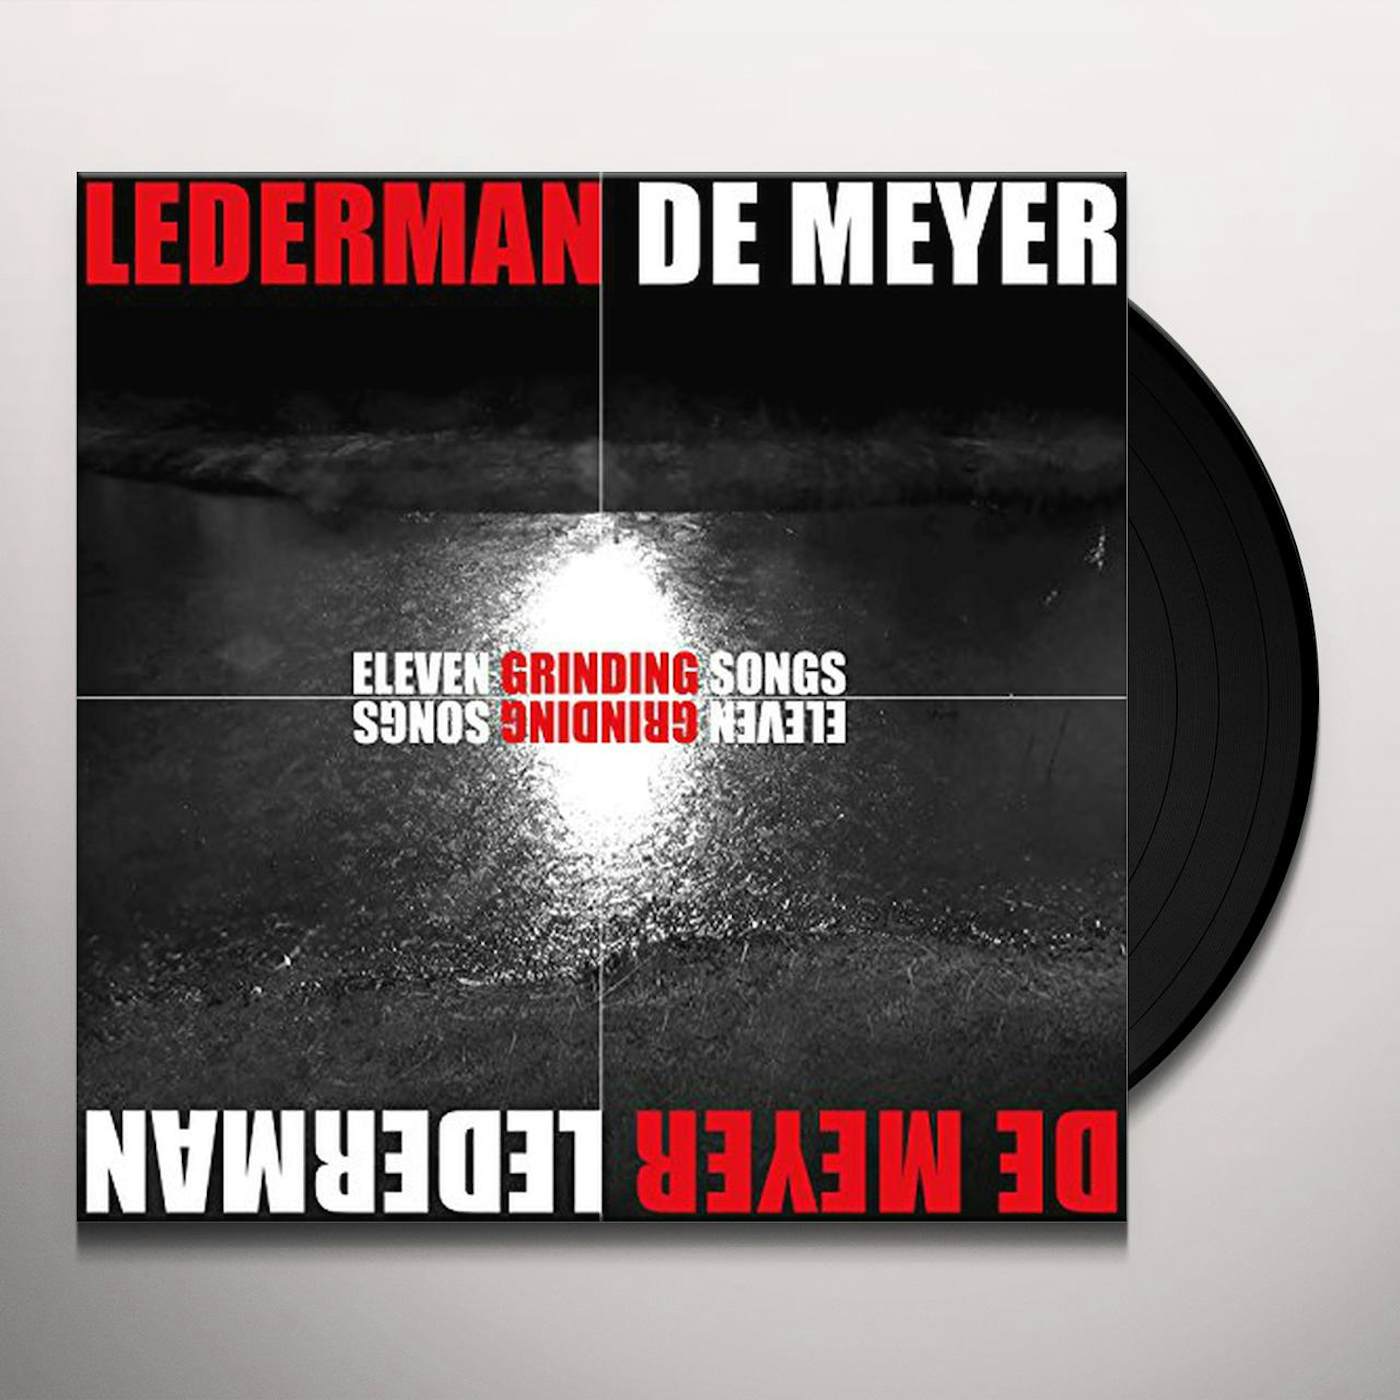 Lederman Eleven Grinding Songs Vinyl Record